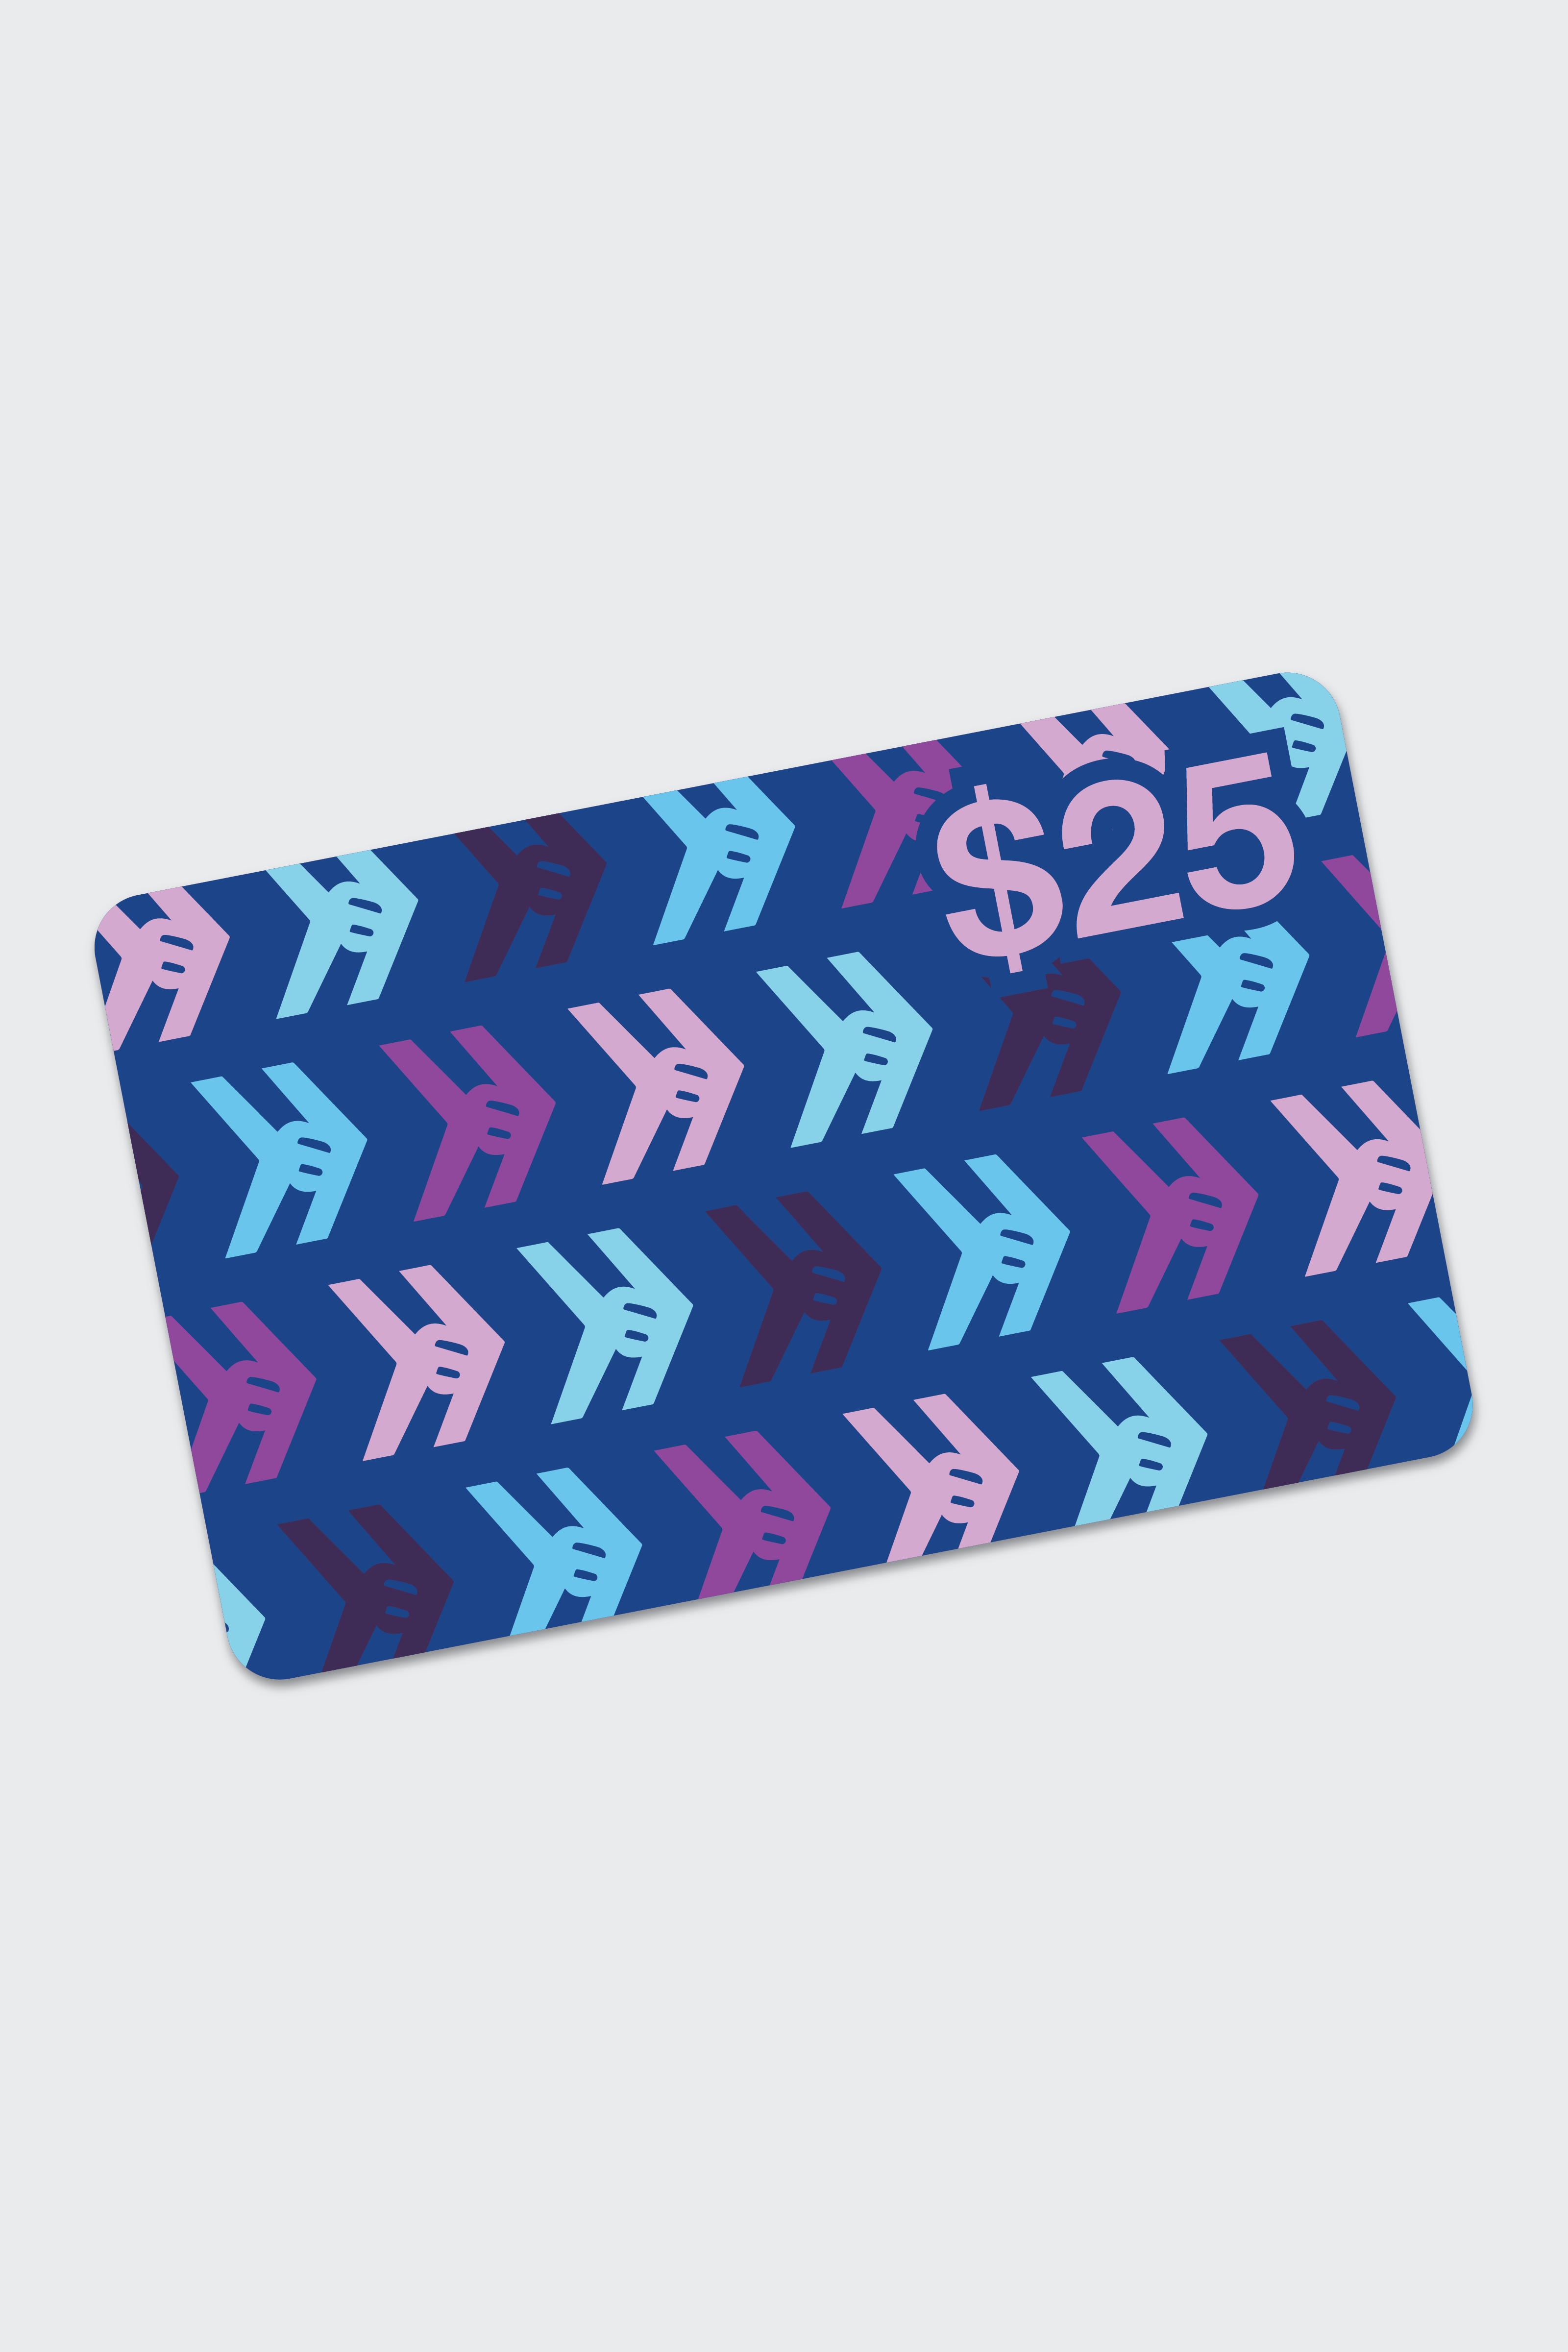 $25 Smosh Digital Gift Card